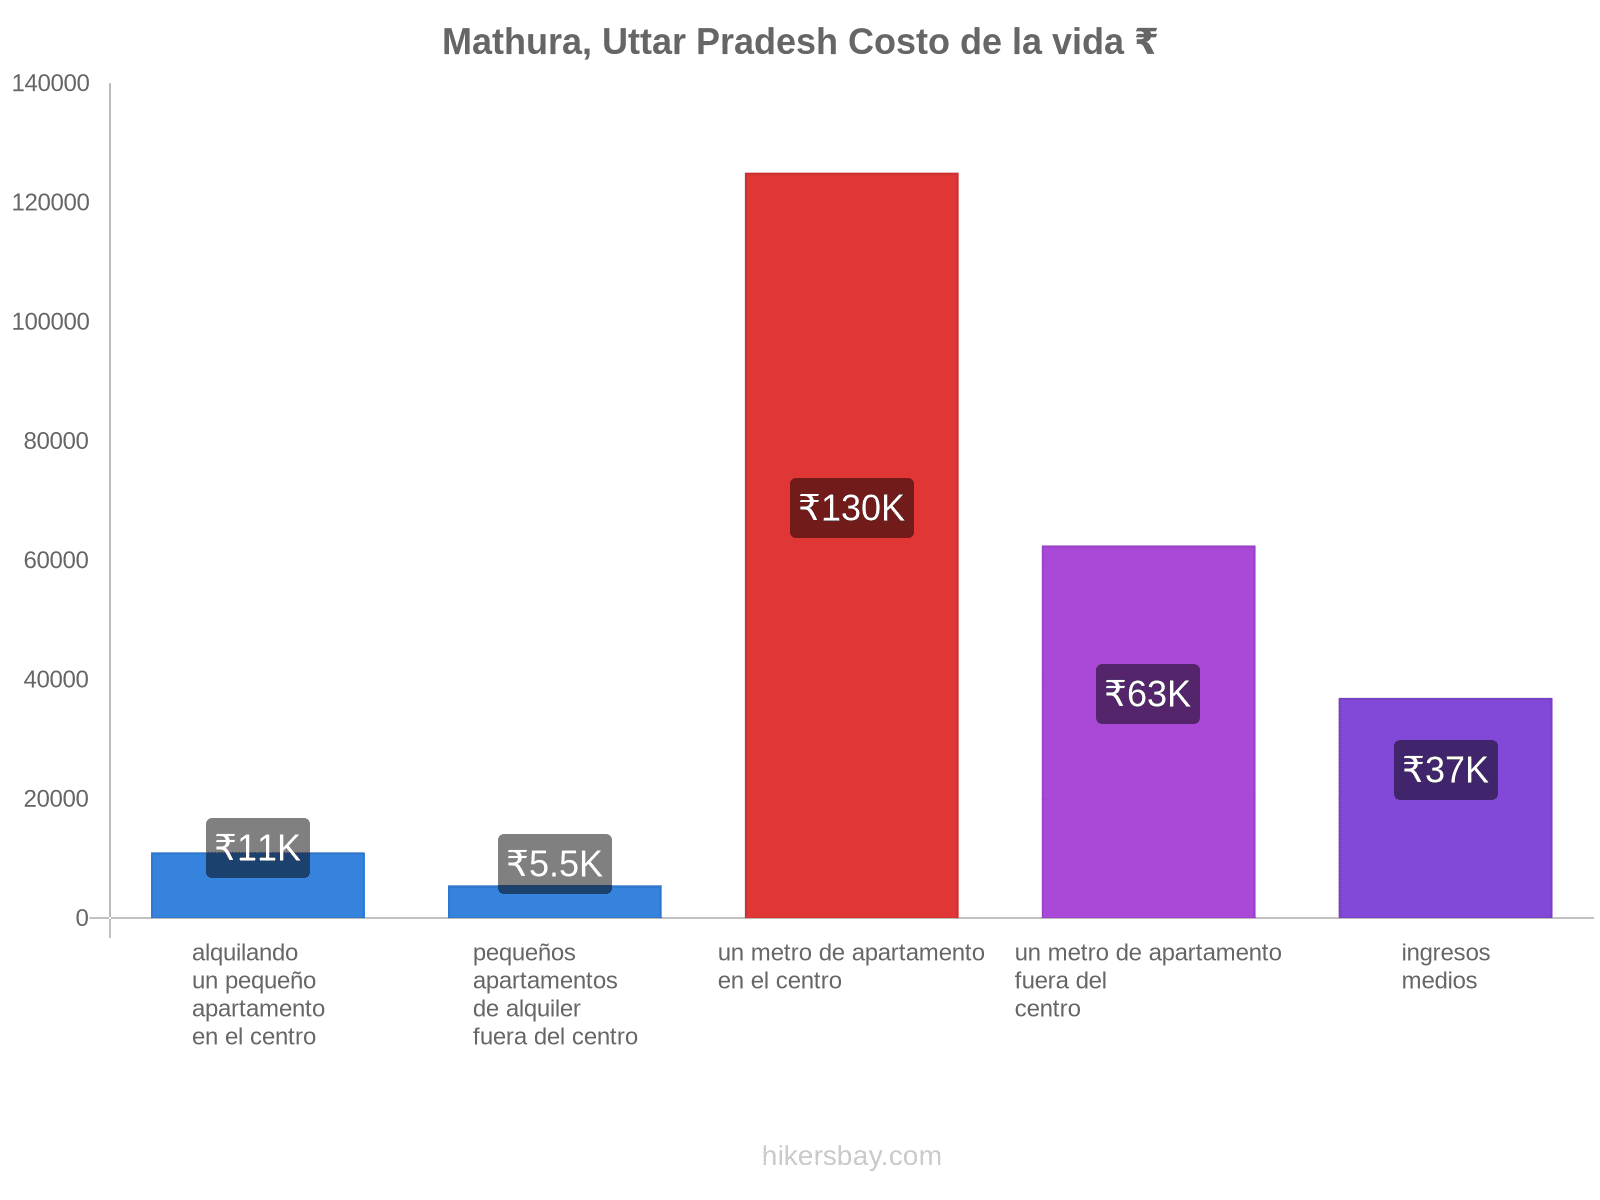 Mathura, Uttar Pradesh costo de la vida hikersbay.com